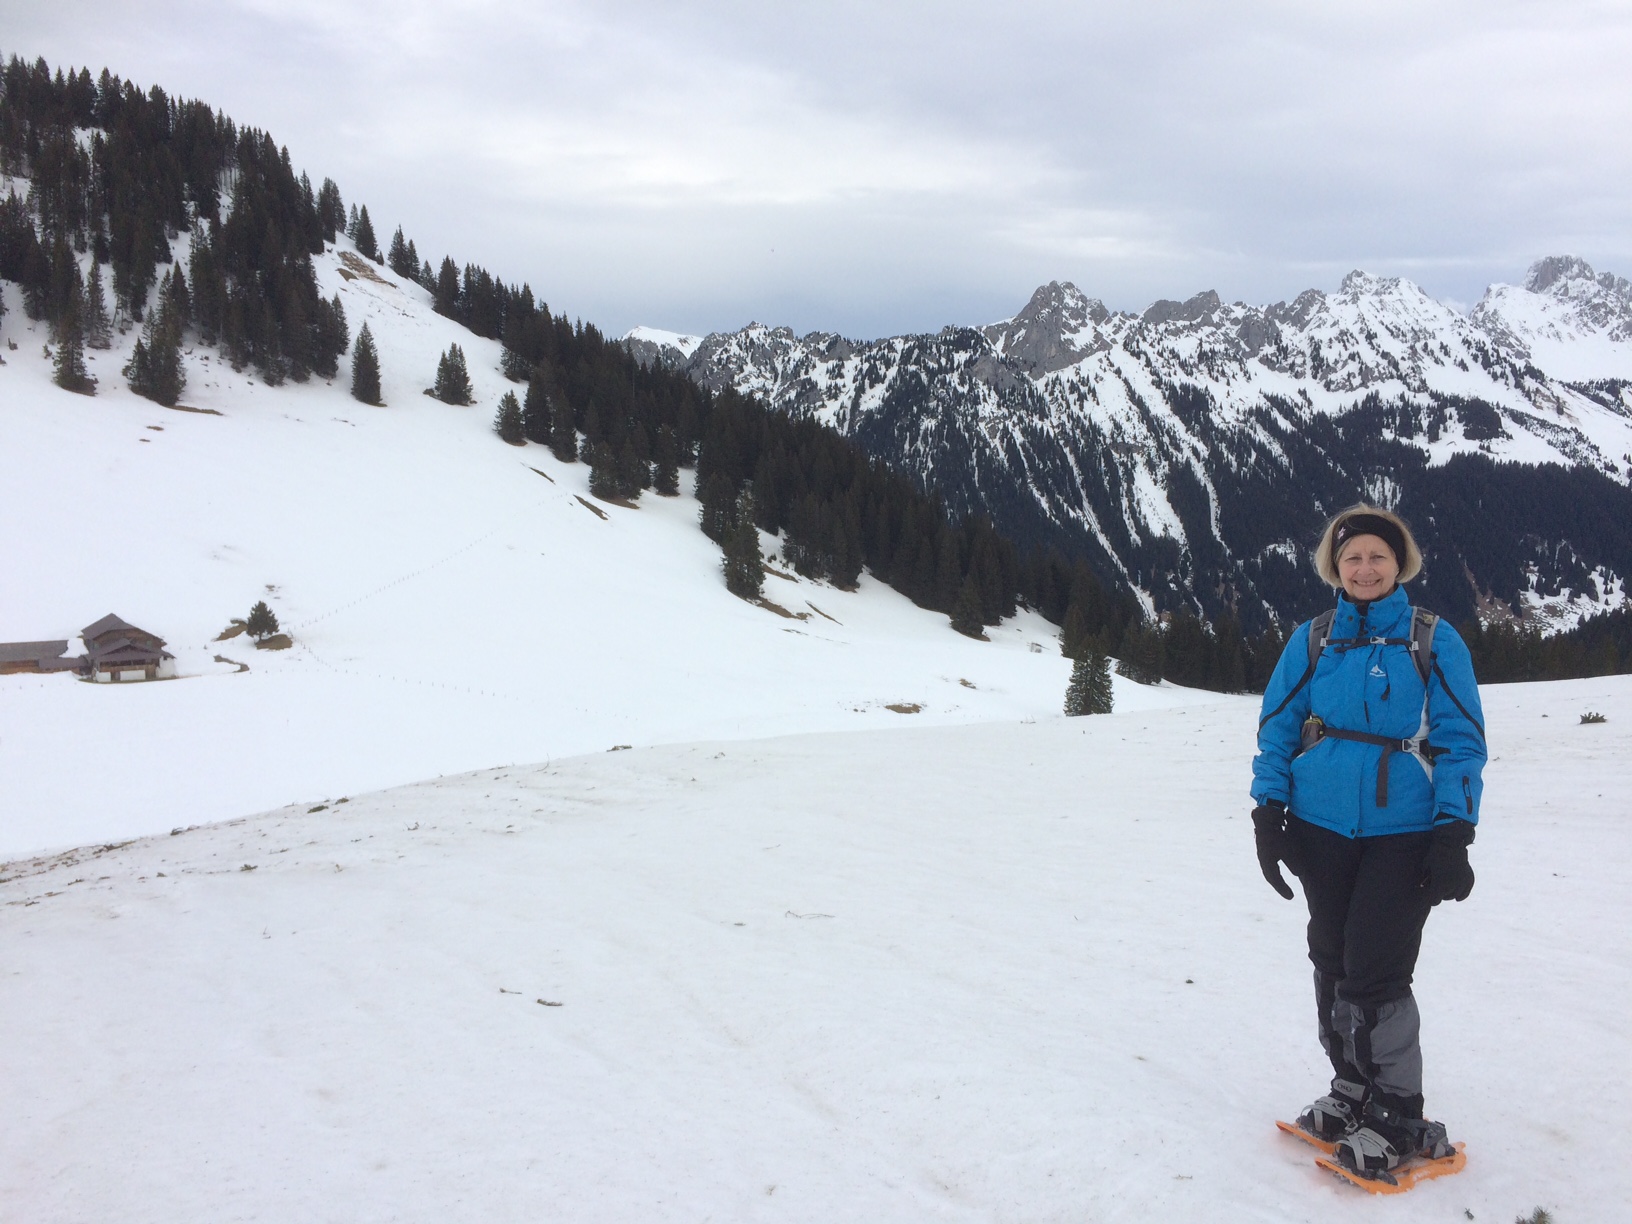 Lynn Denton in snow shoes on a Swiss mountain top